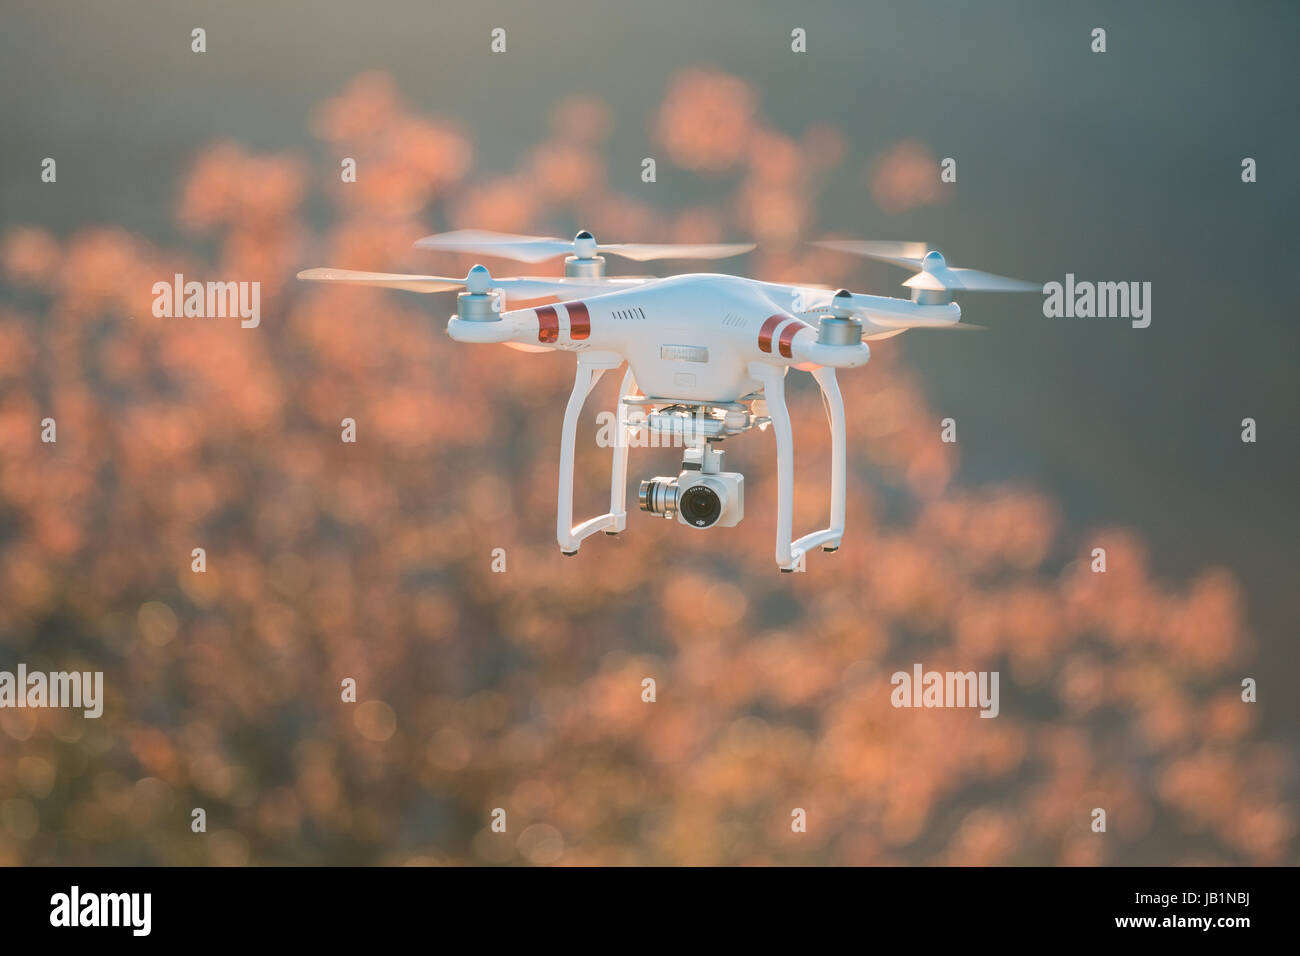 Stock Foto - Phantom-Drohne mit Kamera angeschlossen Stockfoto